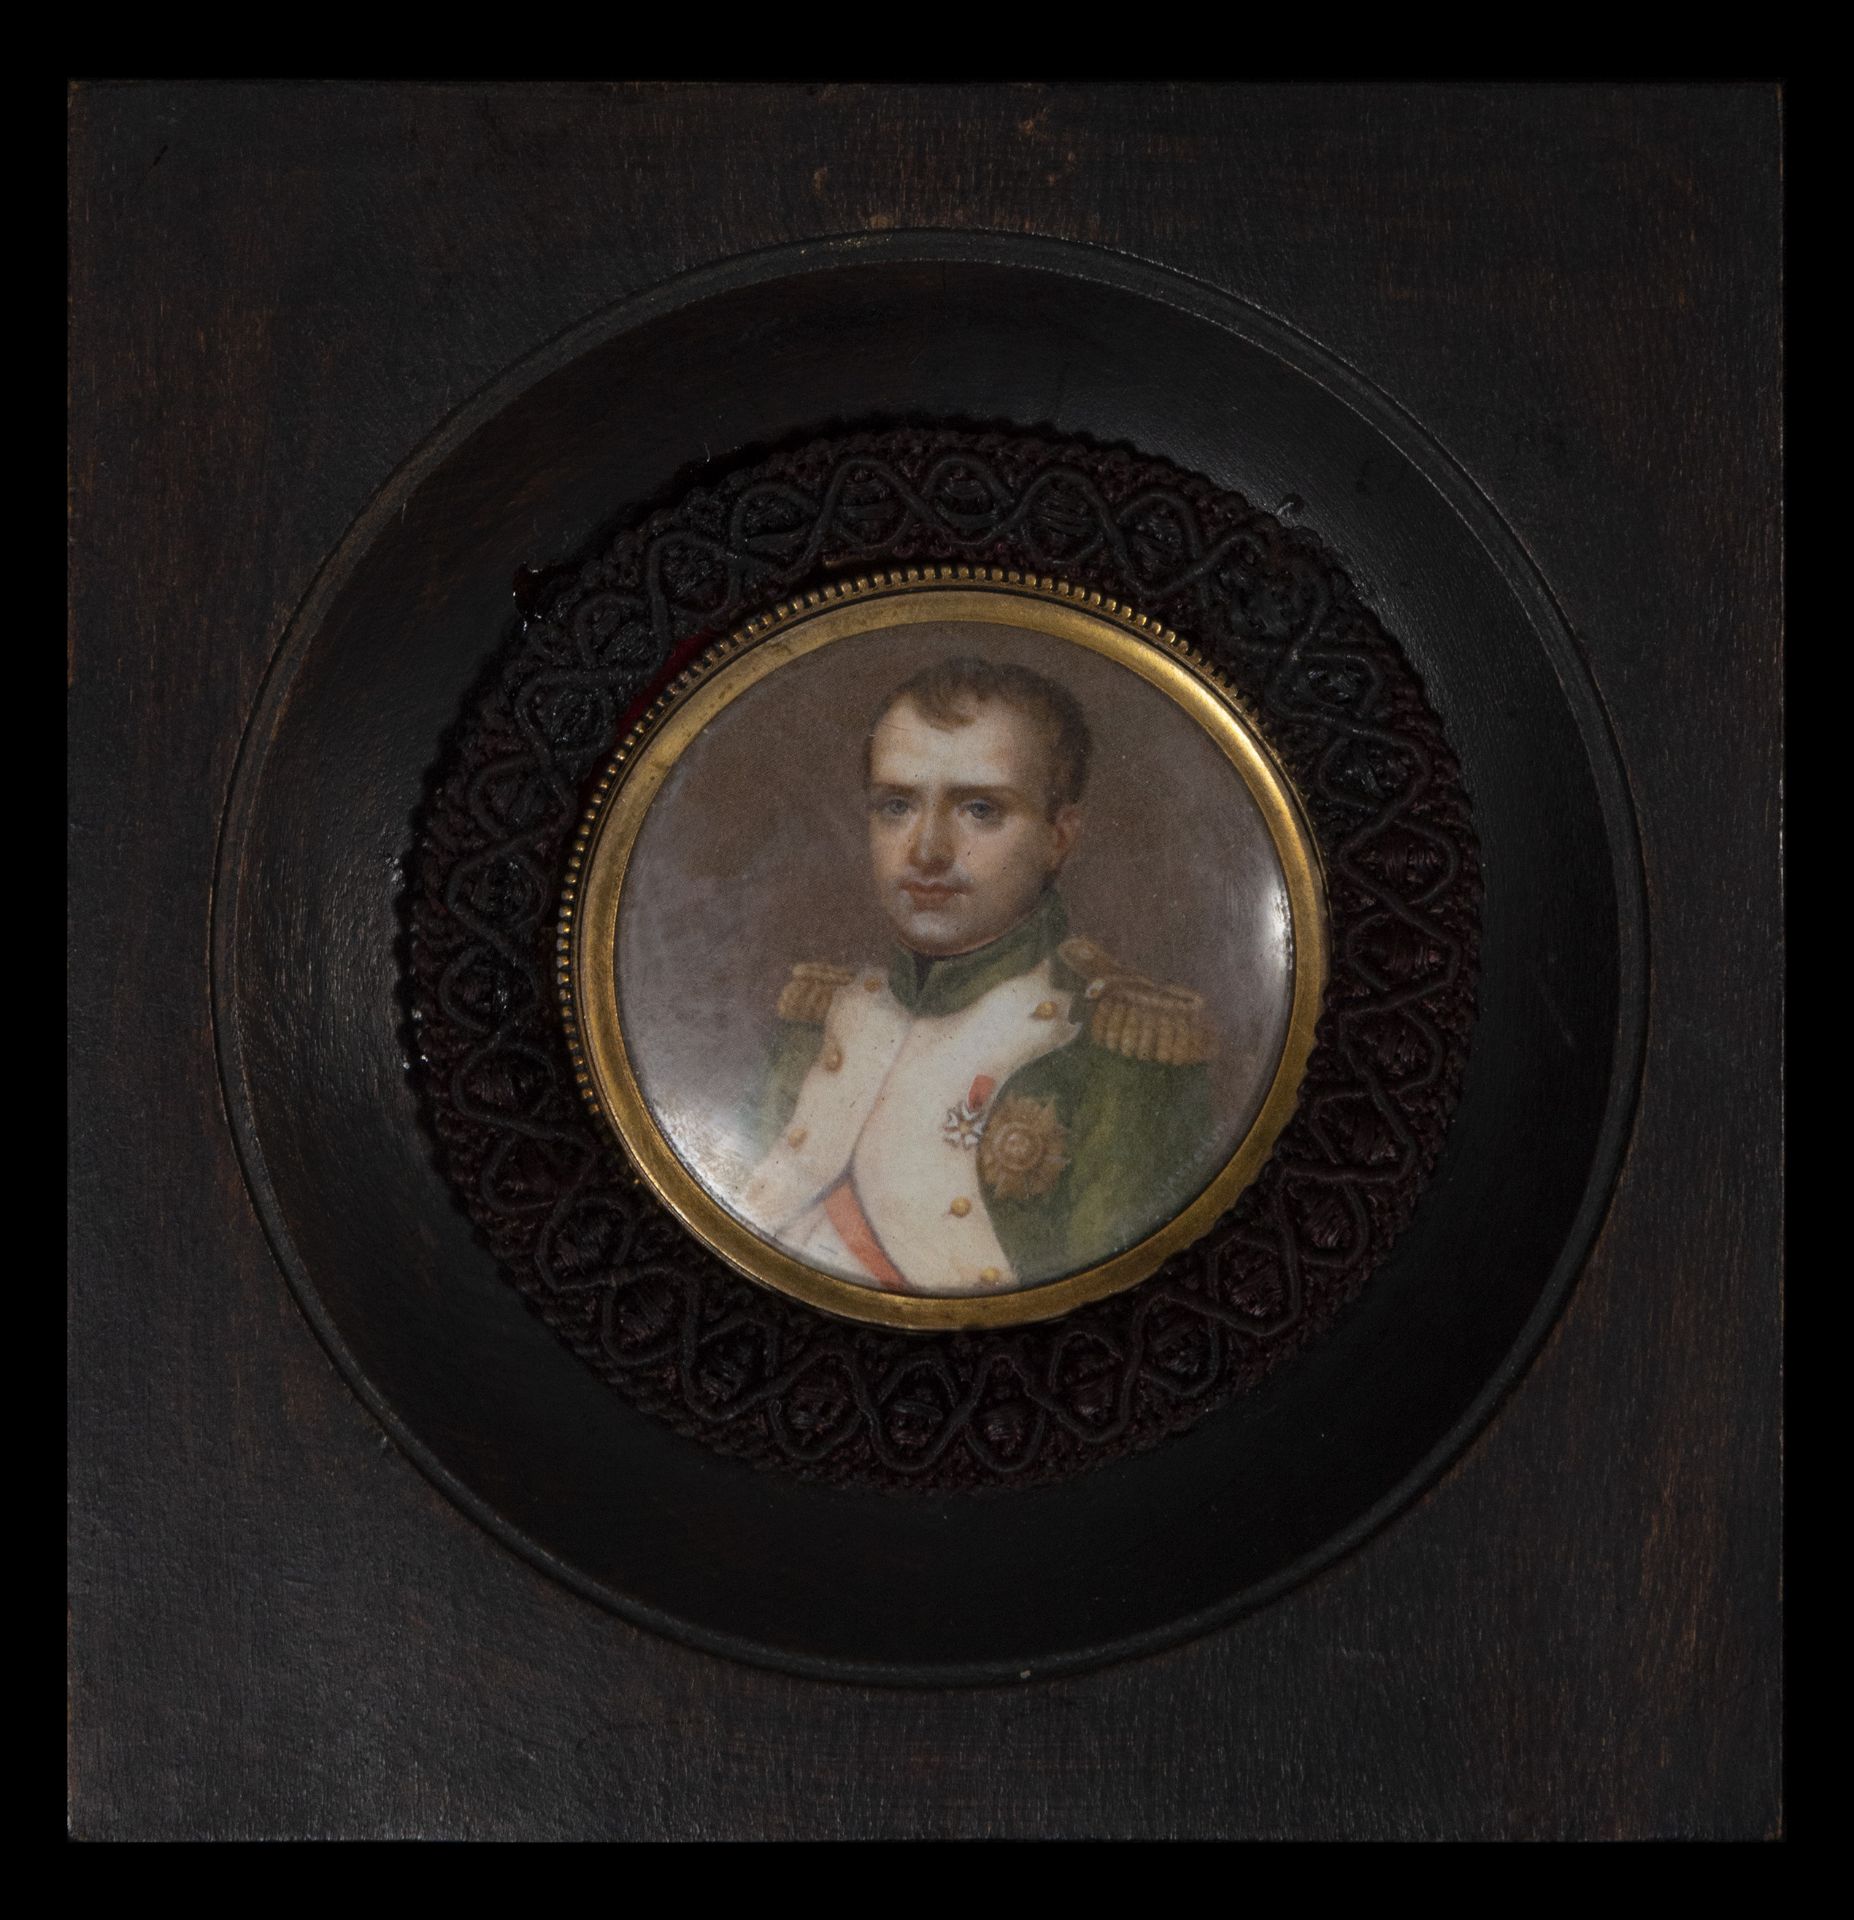 Miniature portrait of Joseph Bonaparte, French school of the early 19th century